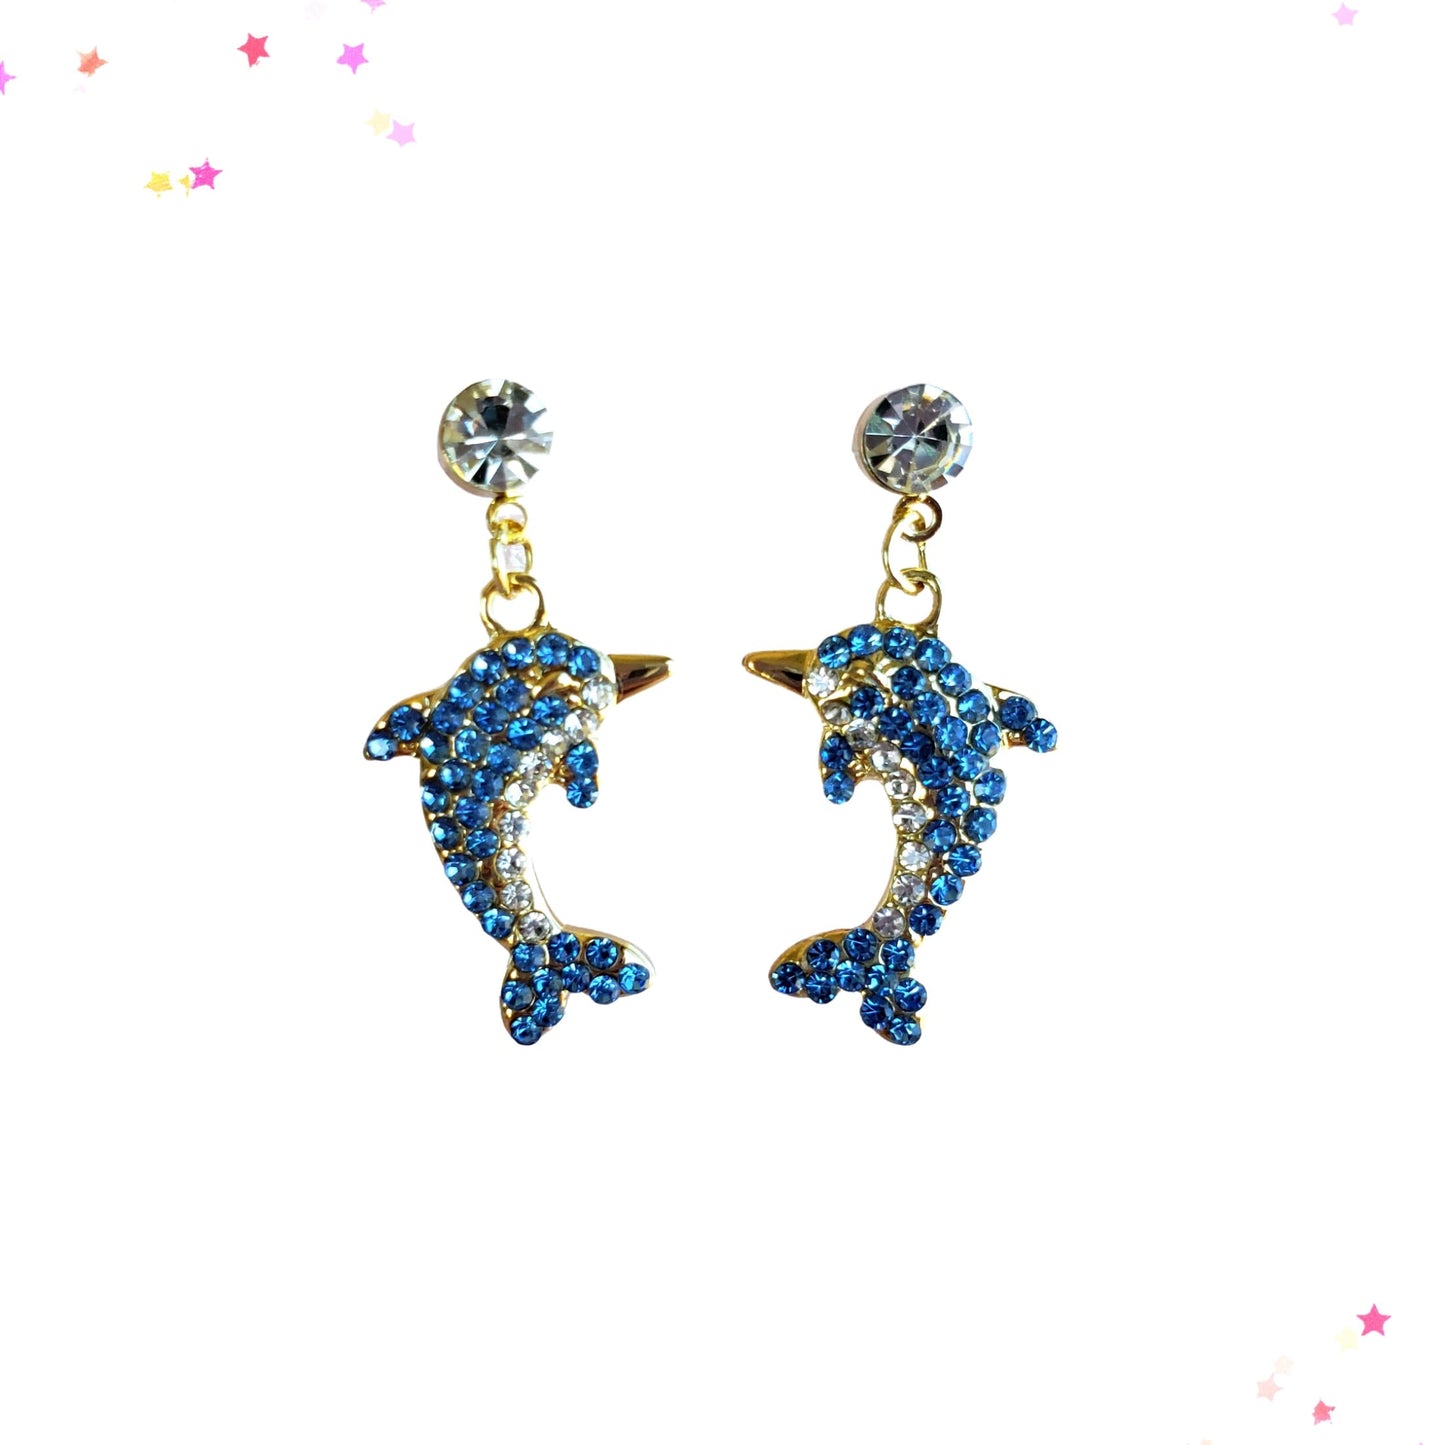 Ocean Blue Rhinestone Encrusted Dolphin Earrings from Confetti Kitty, Only 12.99